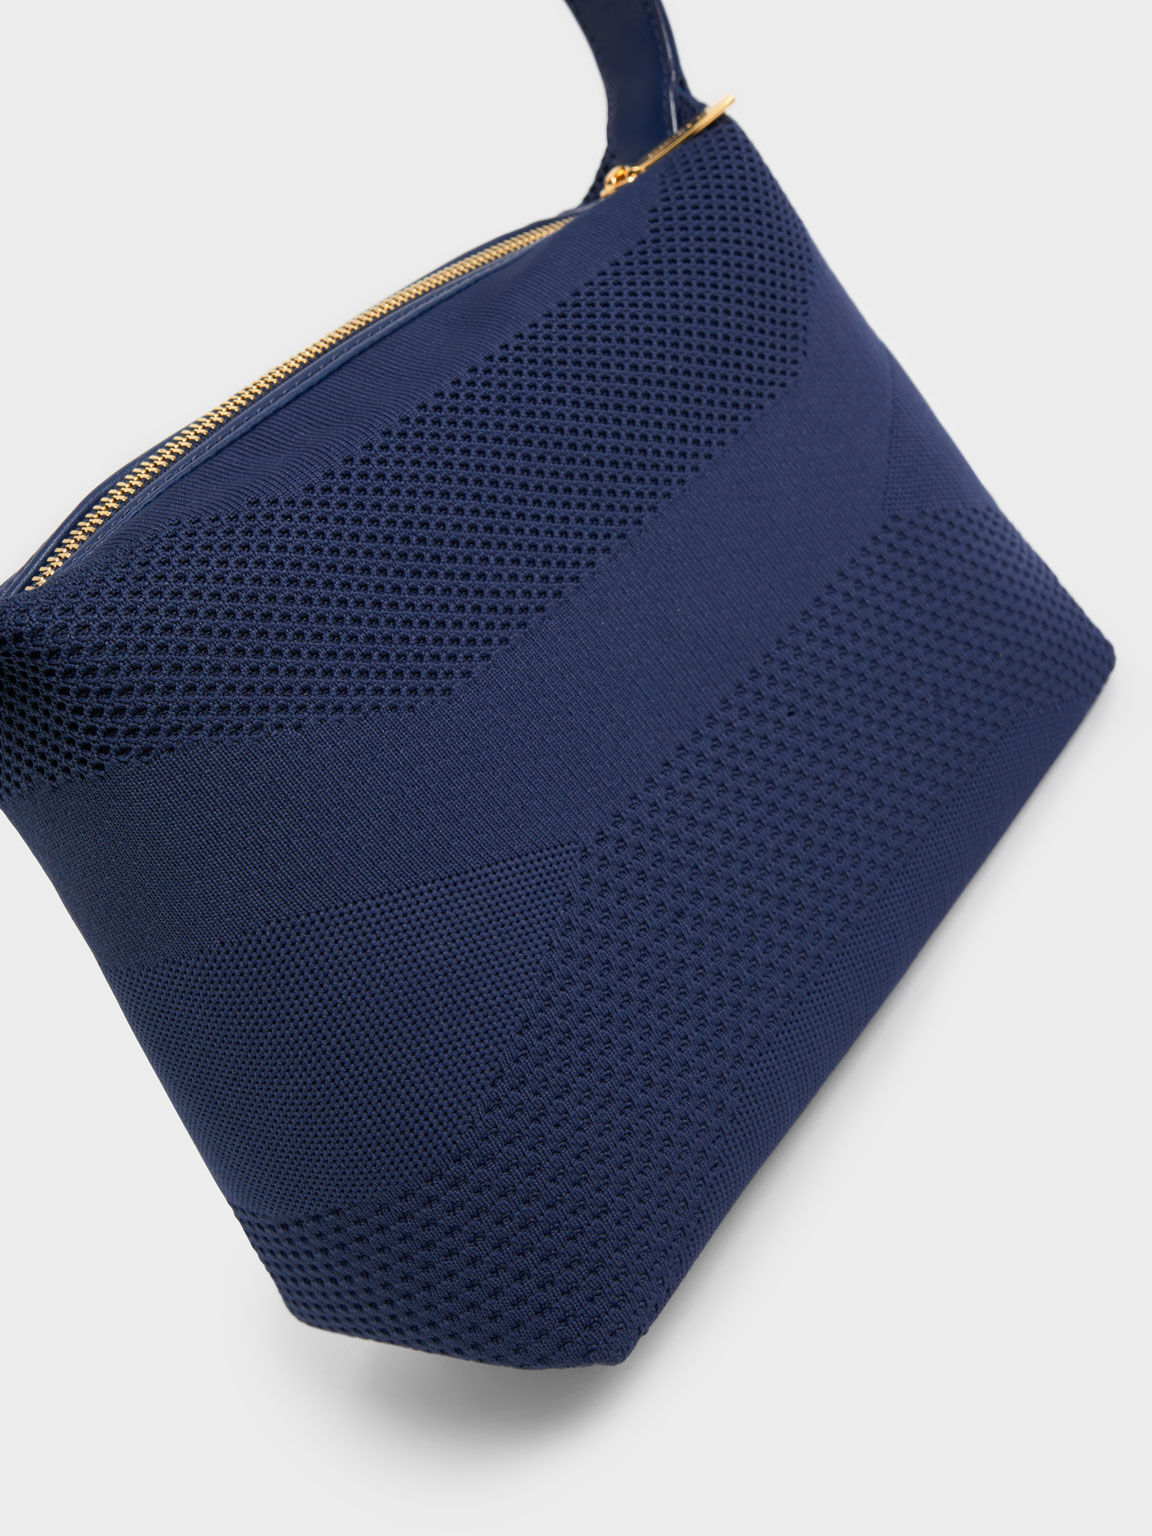 Lorain Knit Shoulder Bag, Navy, hi-res